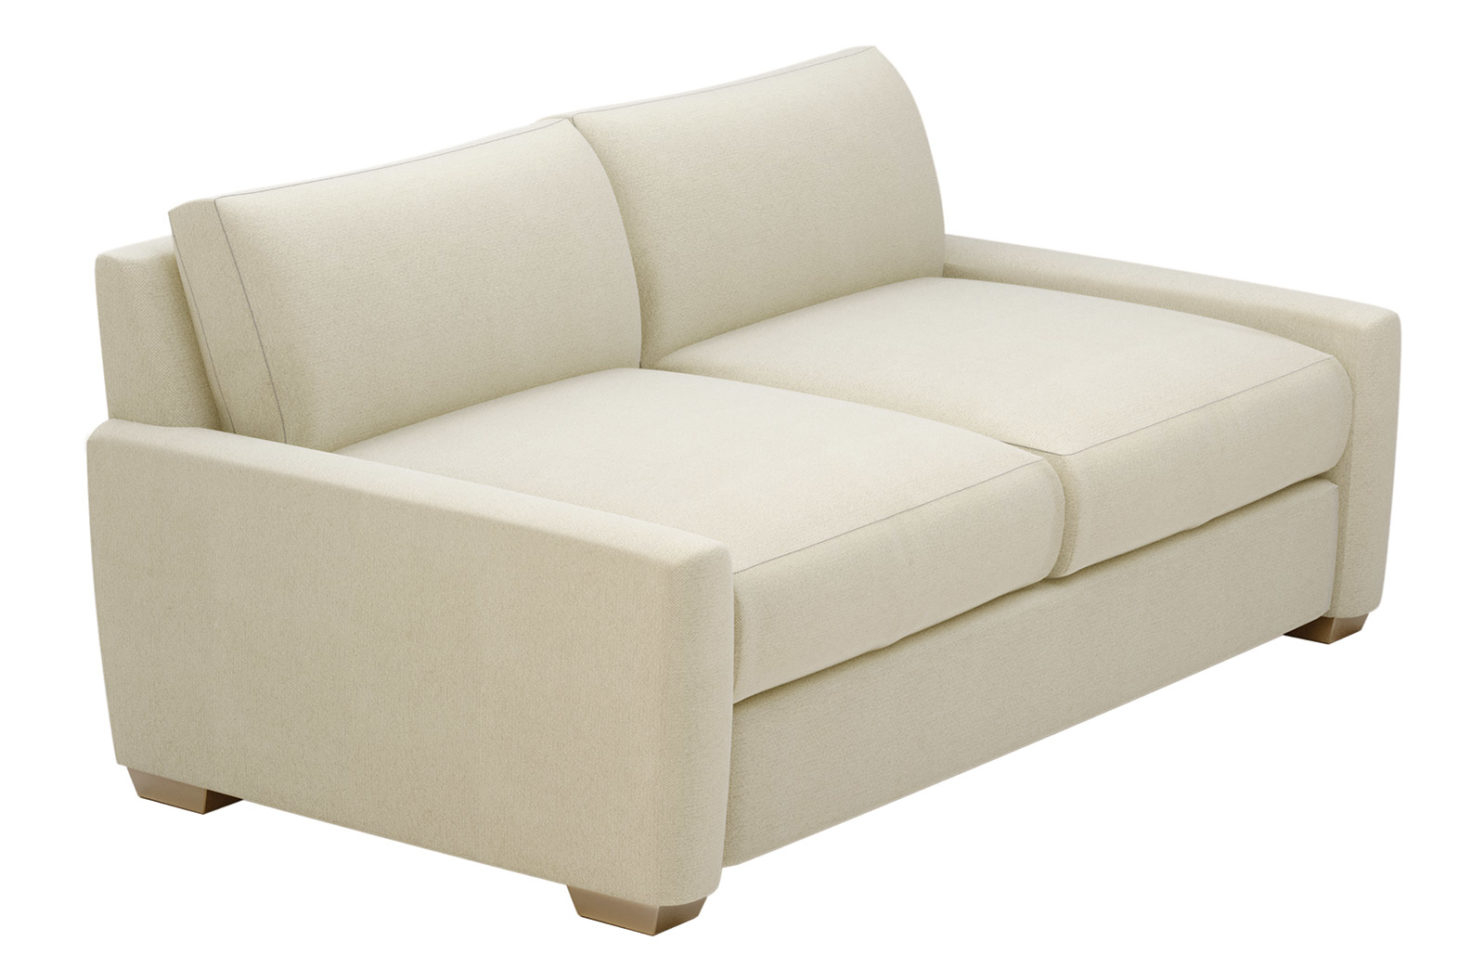 Seasonal Living Fizz Imperial Spritz 3-Seat Sofa